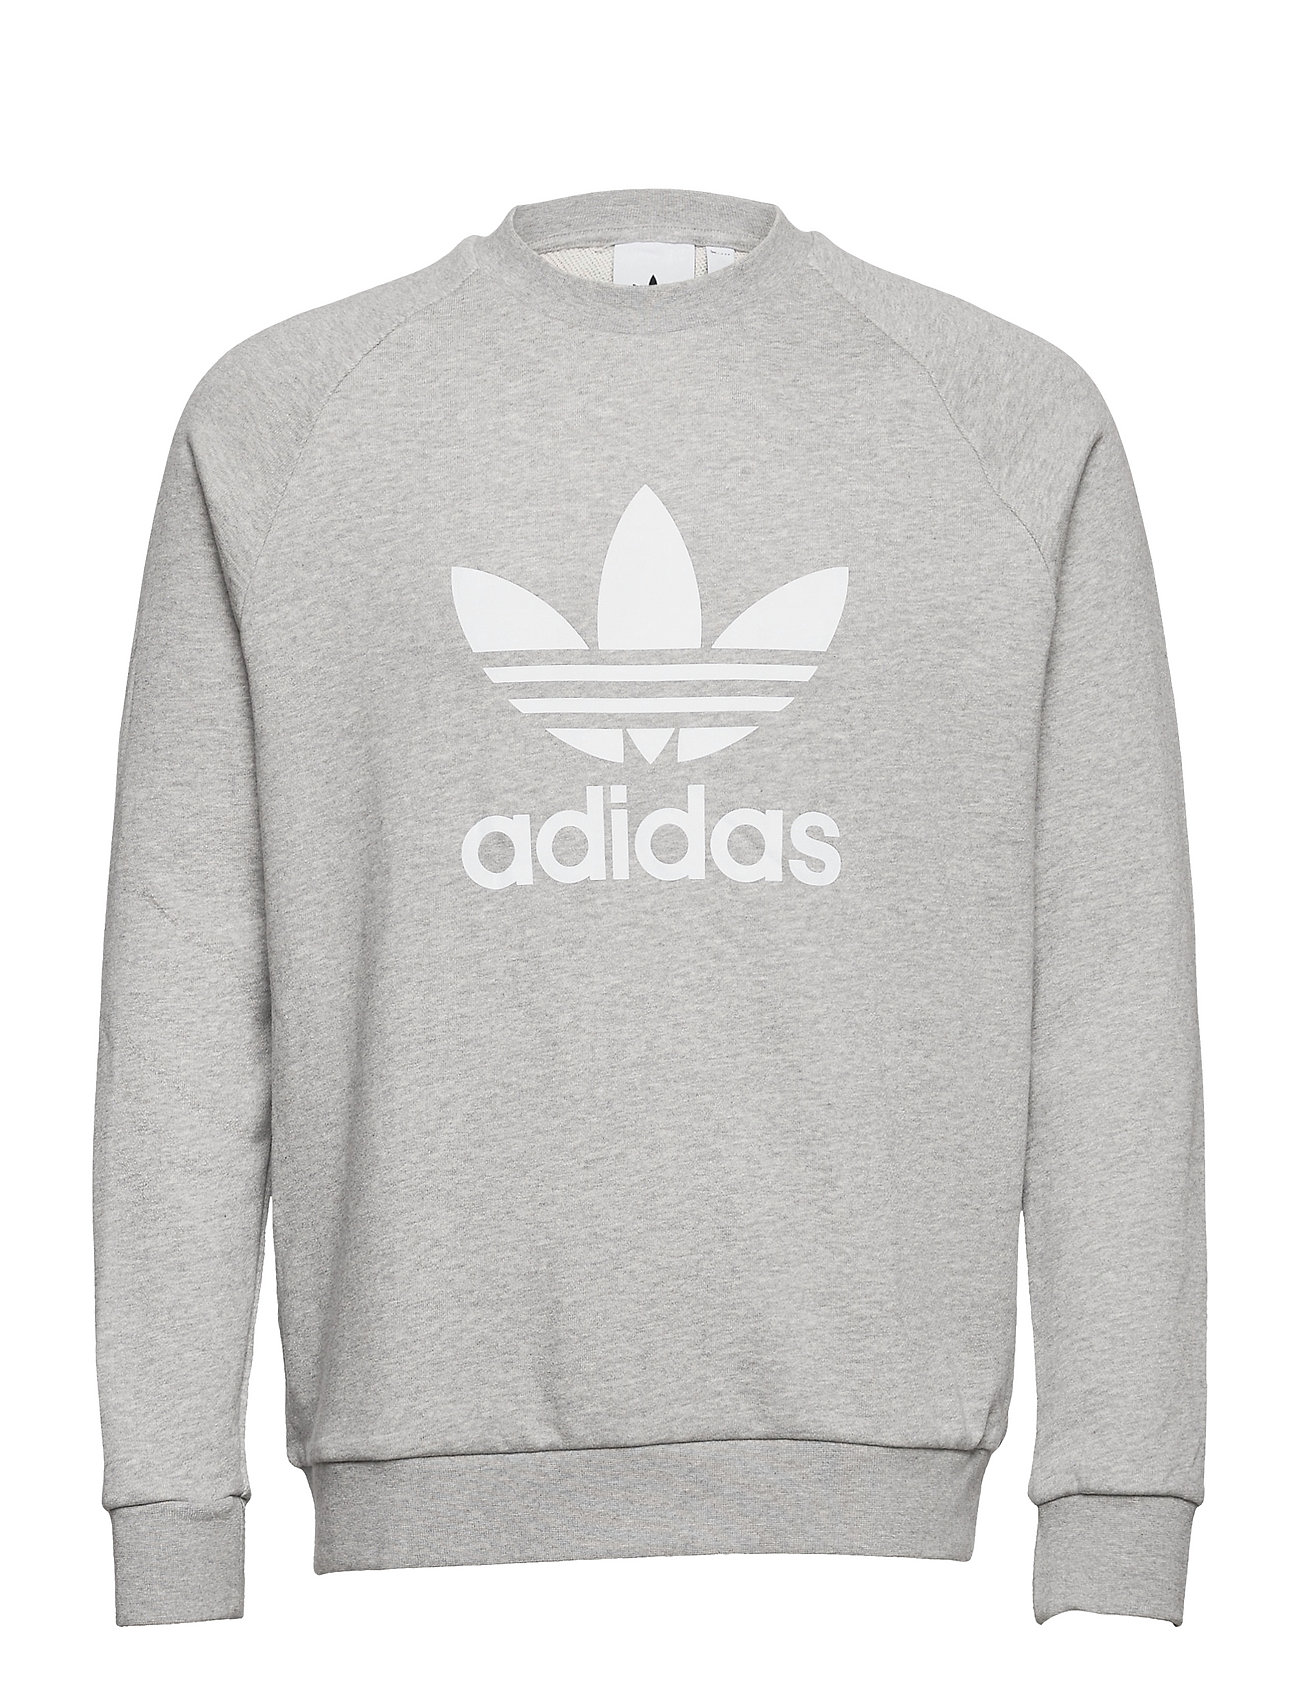 Adicolor - Sweatshirt & Trefoil Crewneck Sweatshirts Kapuzenpullover Classics Originals adidas